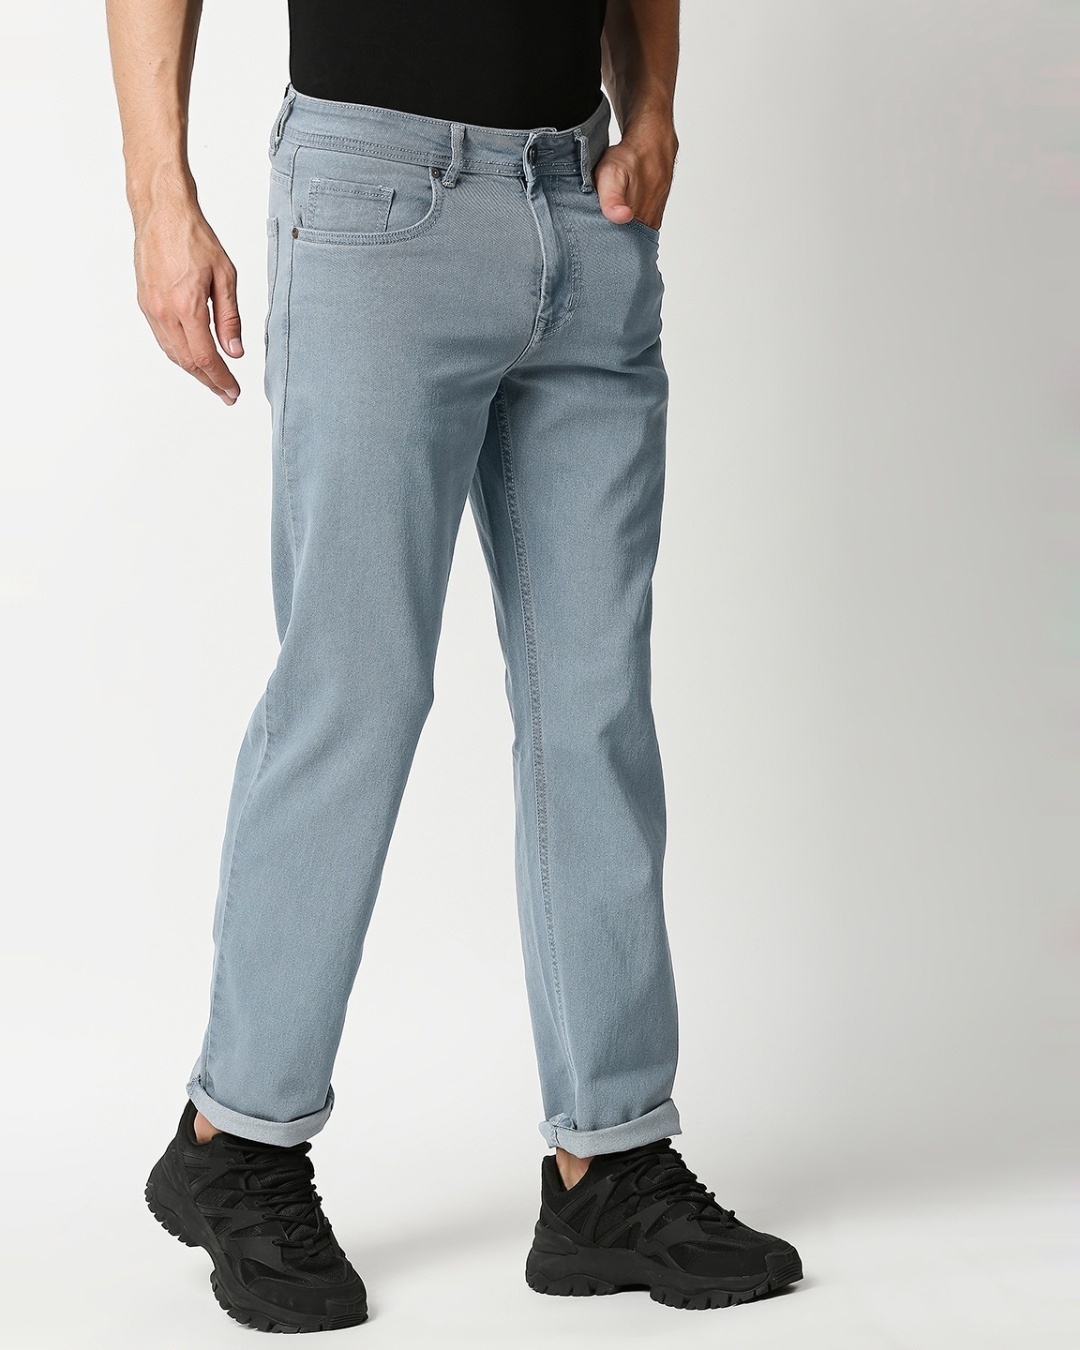 Buy Men's Blue Jeans for Men Blue Online at Bewakoof